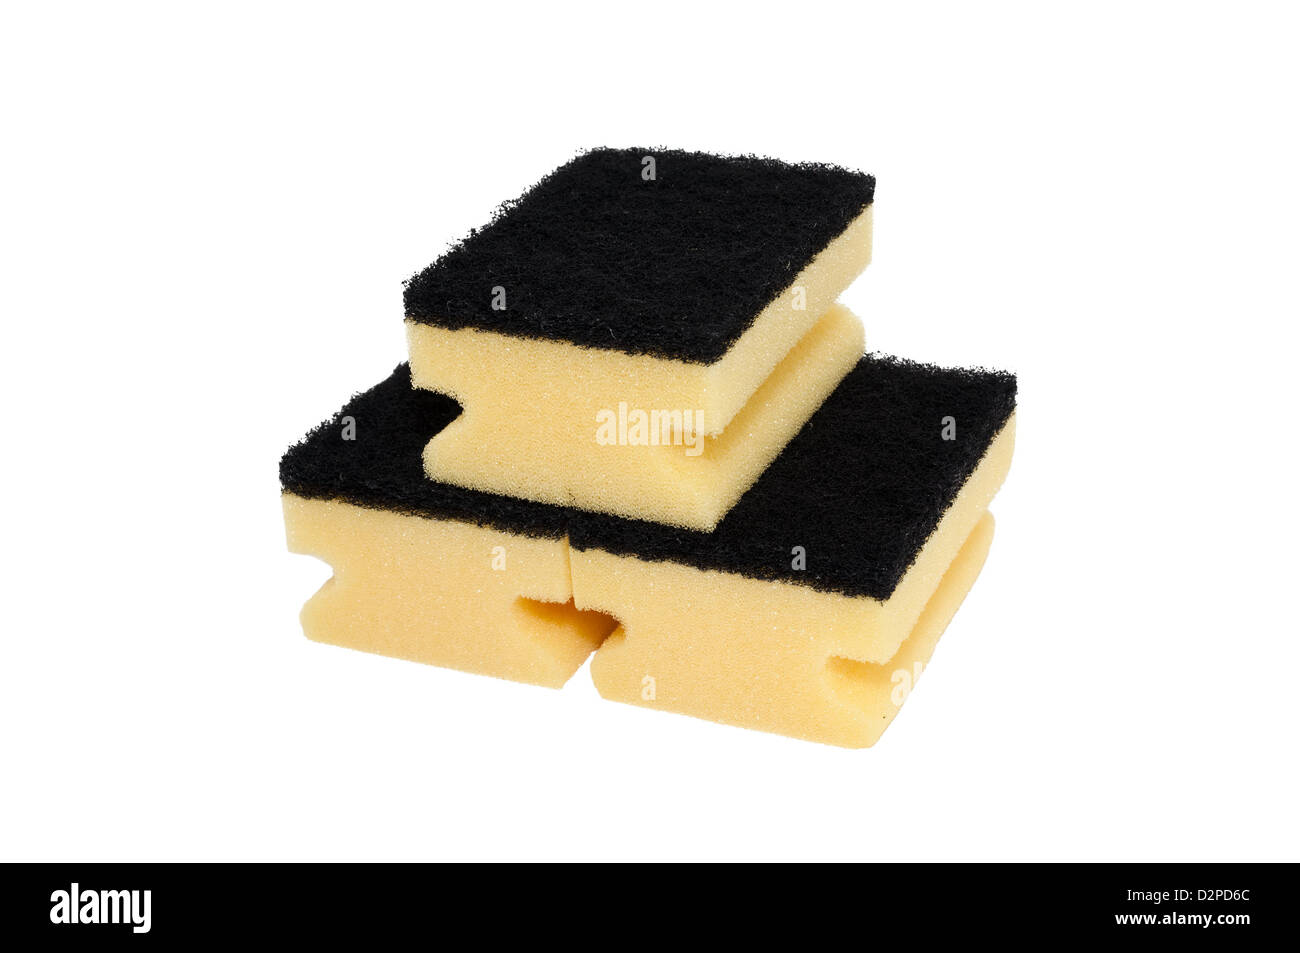 sponges for washing dishes on white background Stock Photo